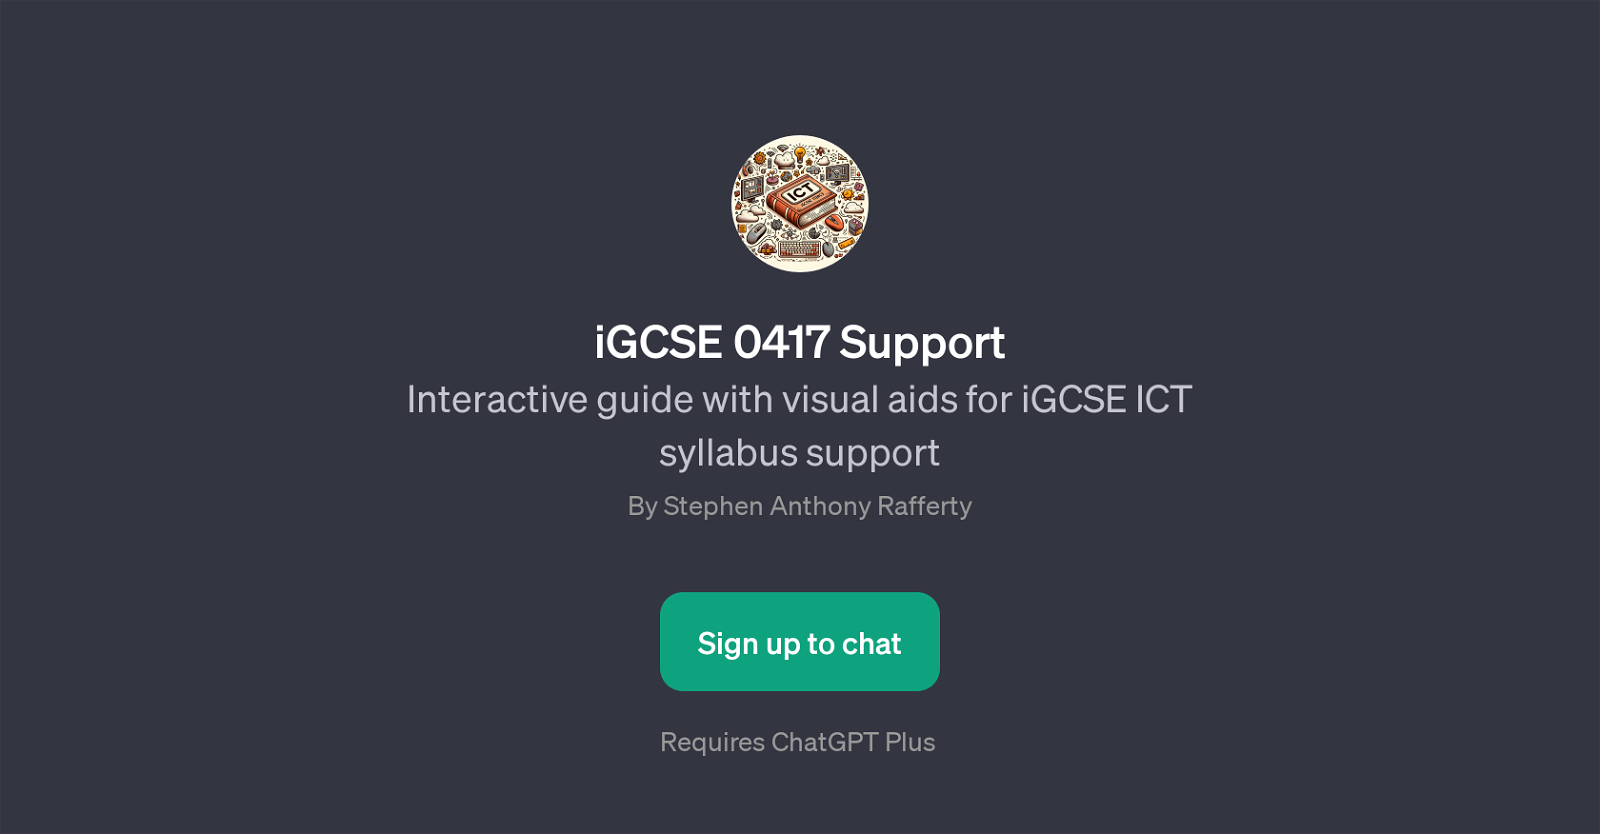 iGCSE 0417 Support website